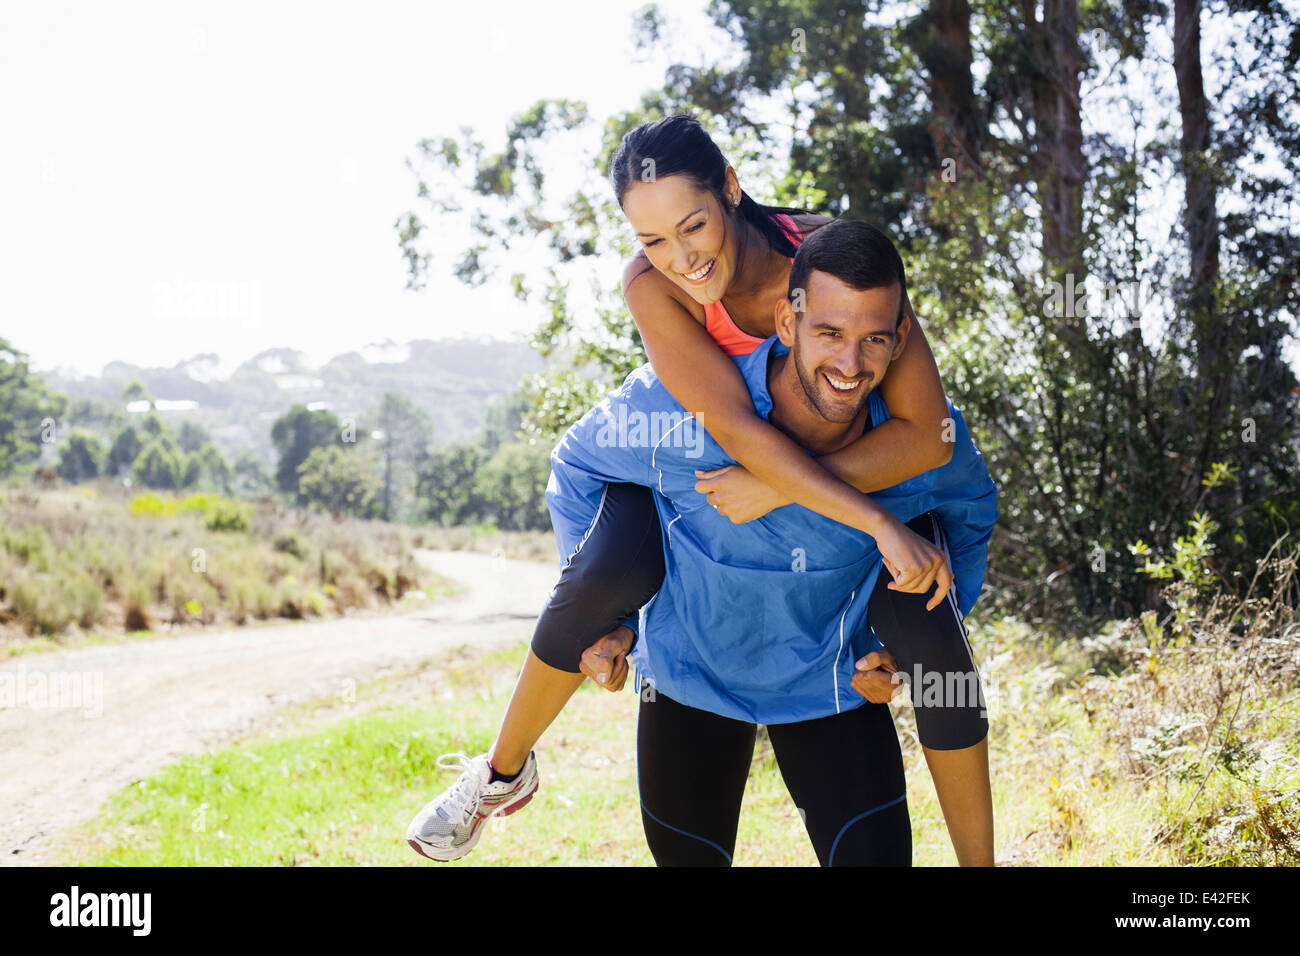 Female jogger riding piggyback on man Stock Photo